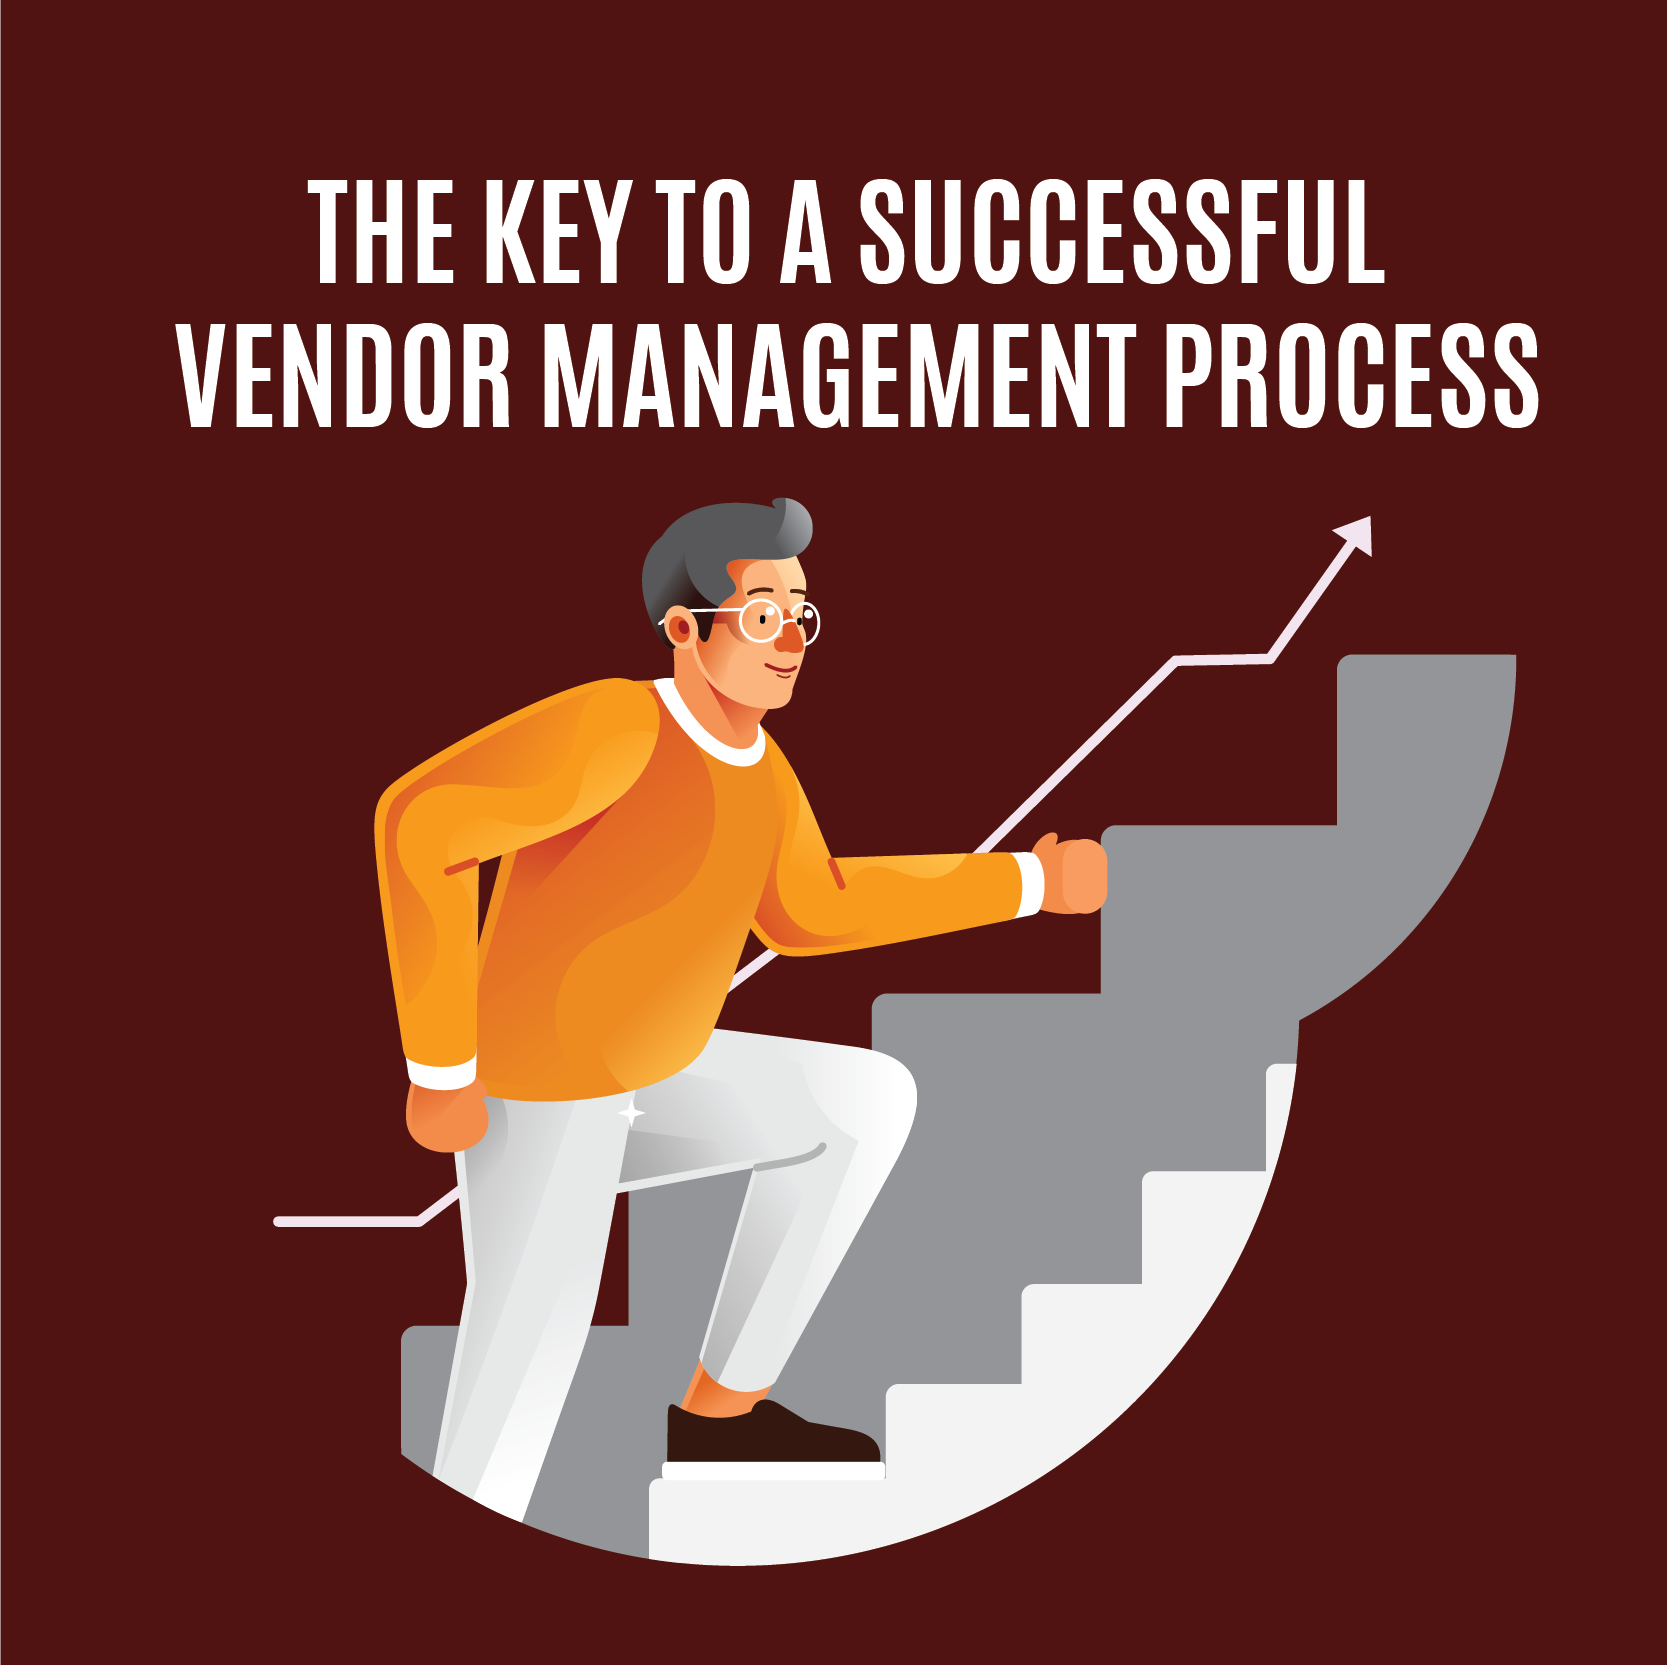 Vendor Management Process